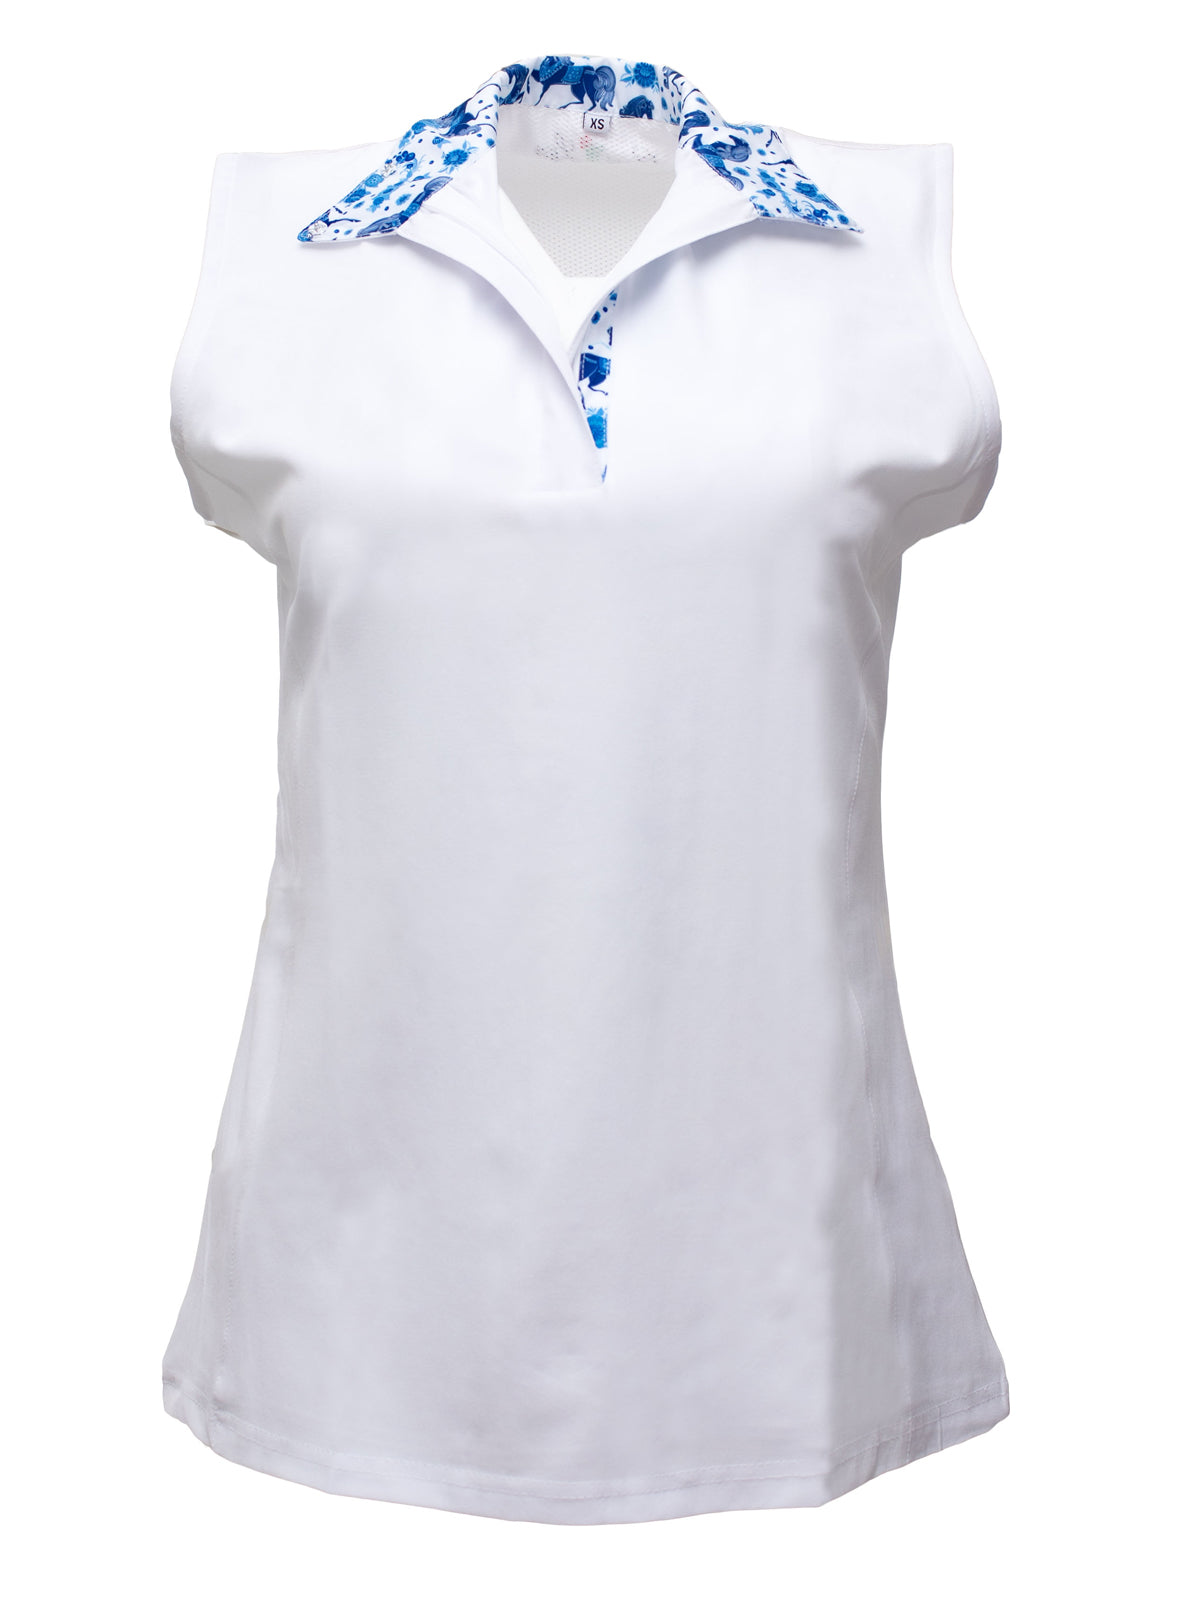 Anni Lyn Sportswear Women's Sleeveless Ventilated Show Shirt